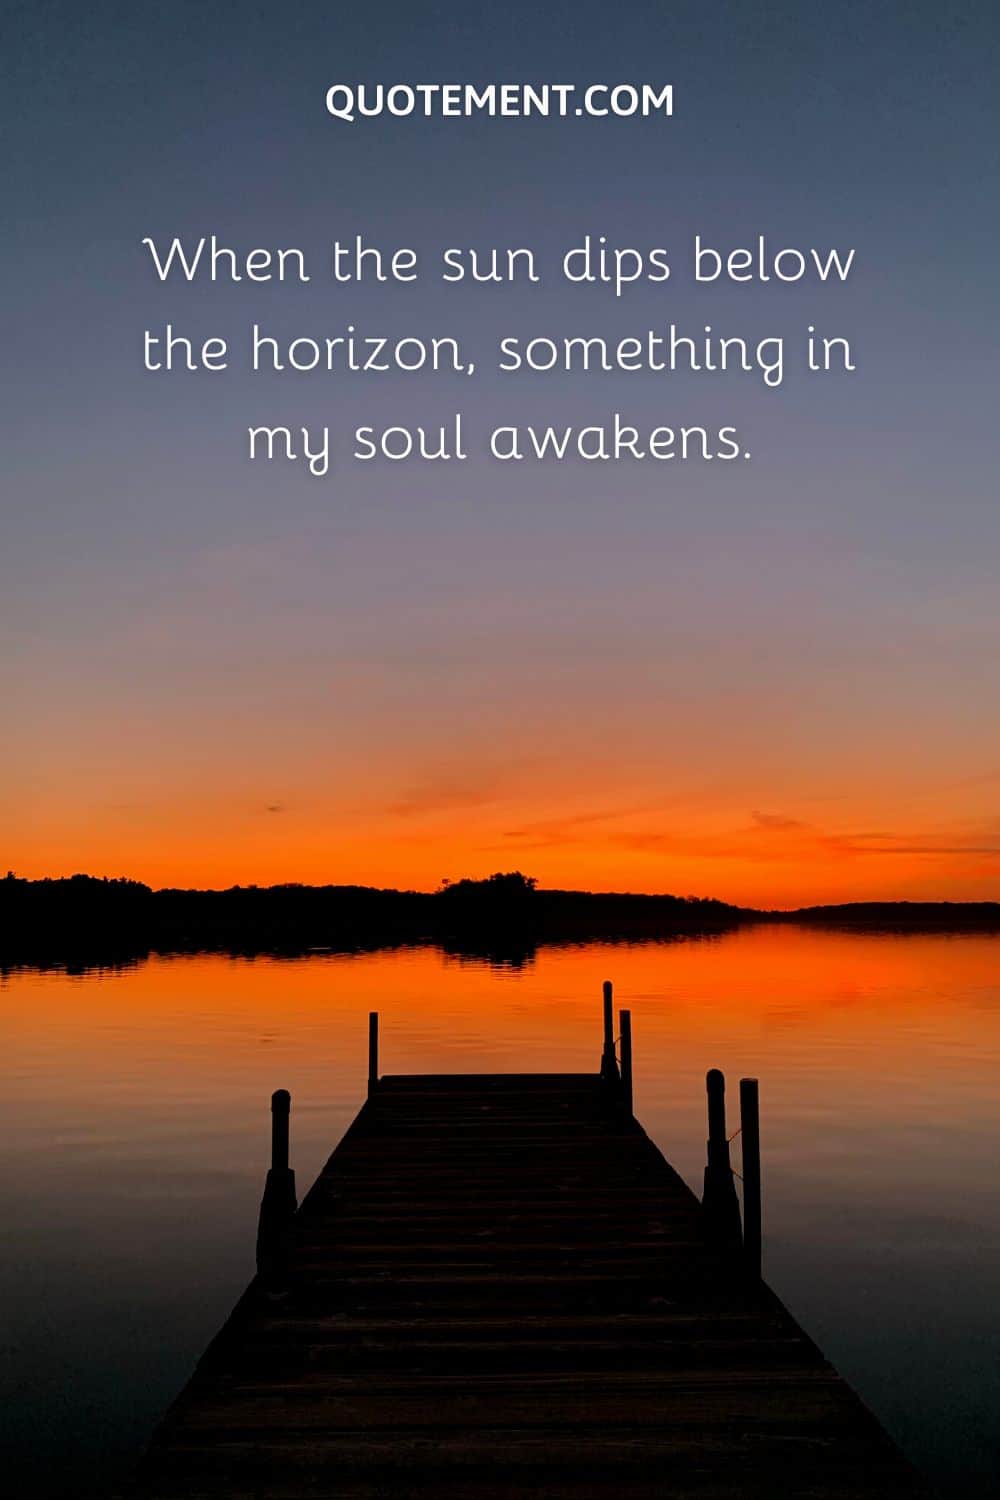 When the sun dips below the horizon, something in my soul awakens.